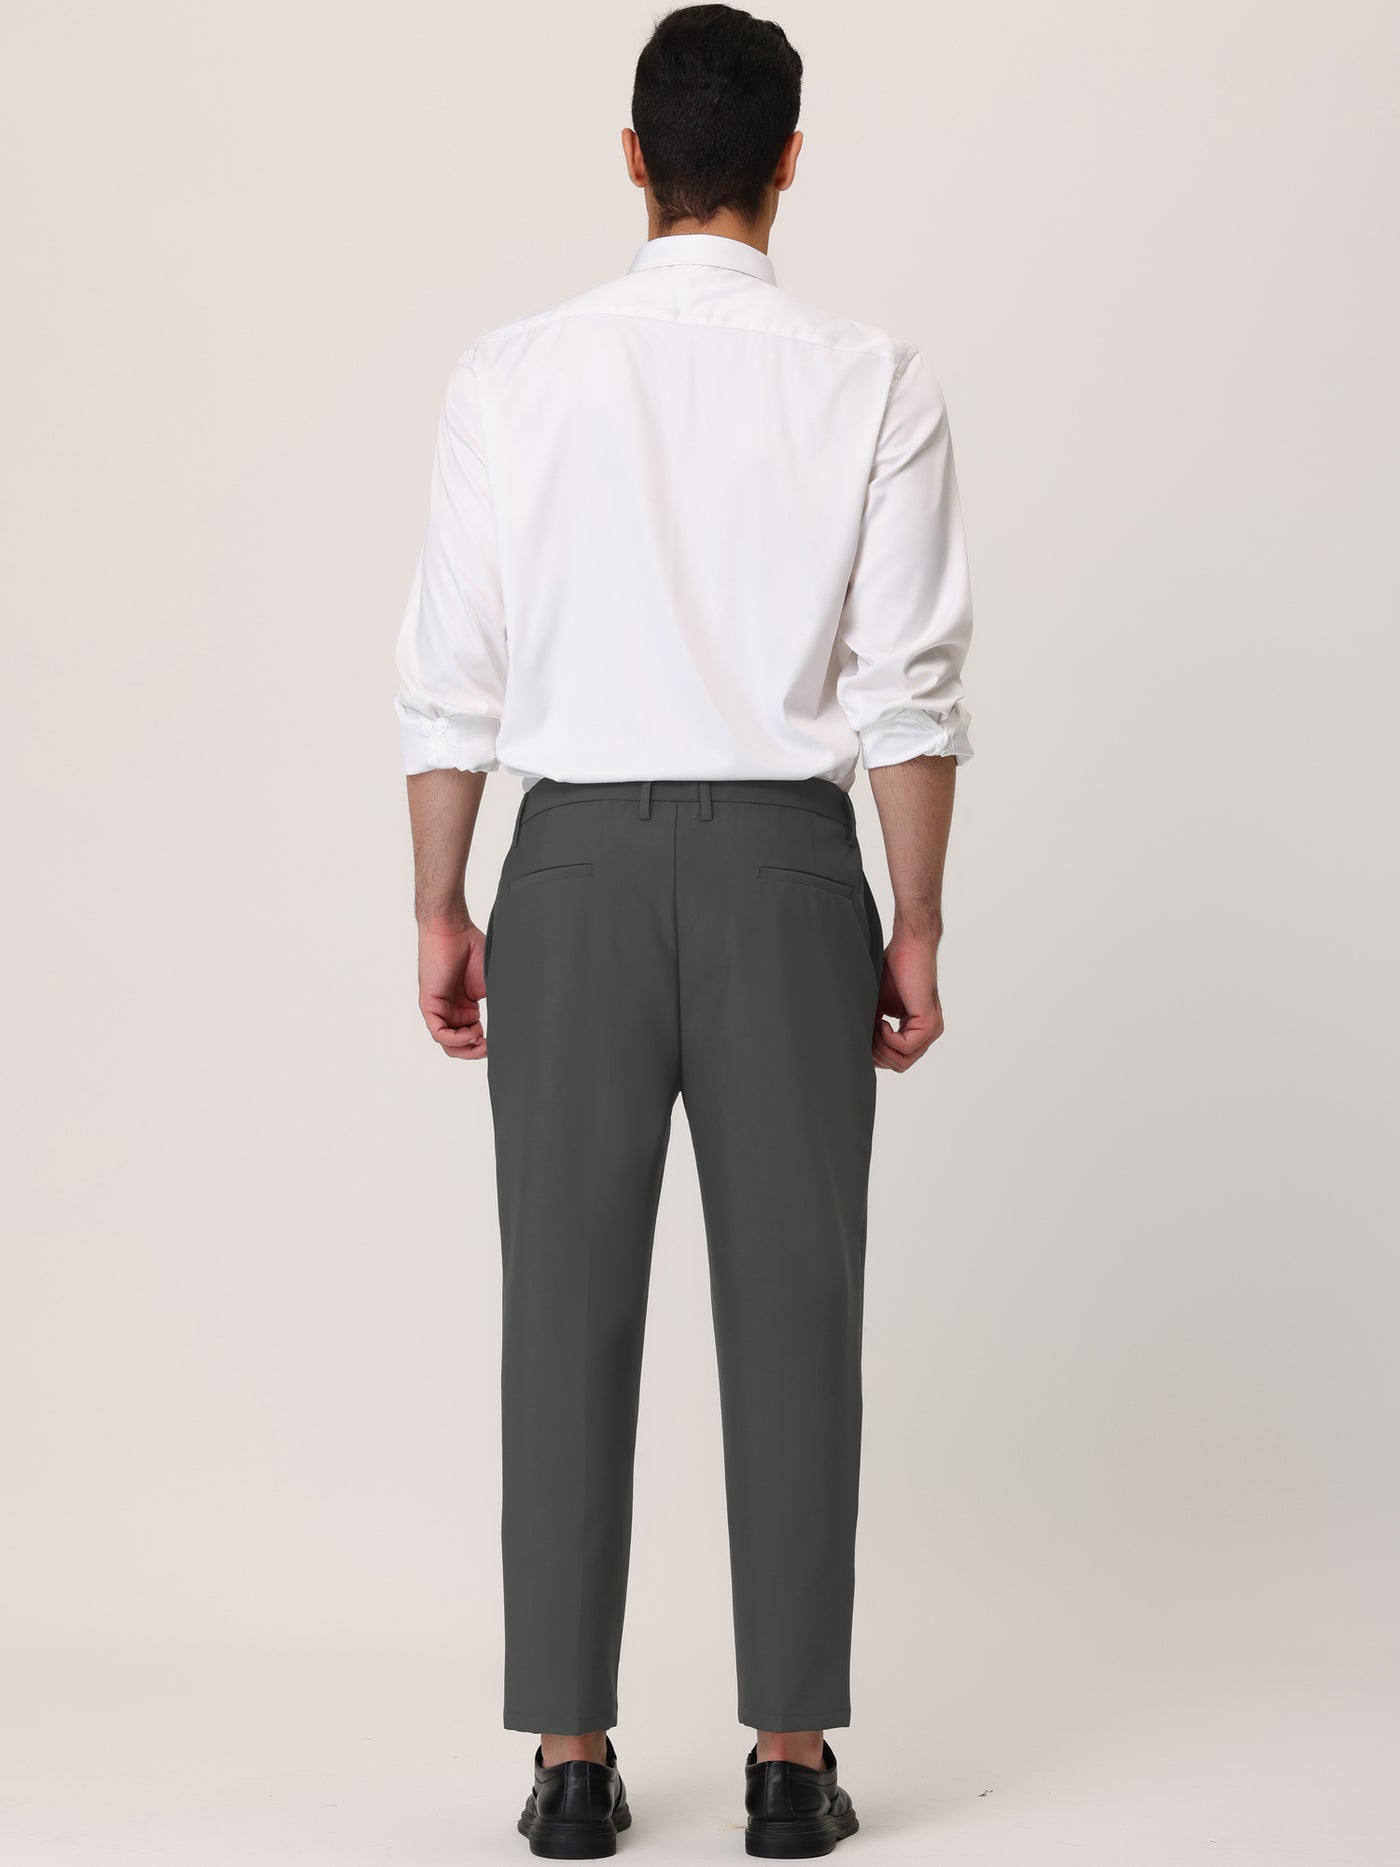 Bublédon Solid Color Flat Front Business Formal Dress Pants